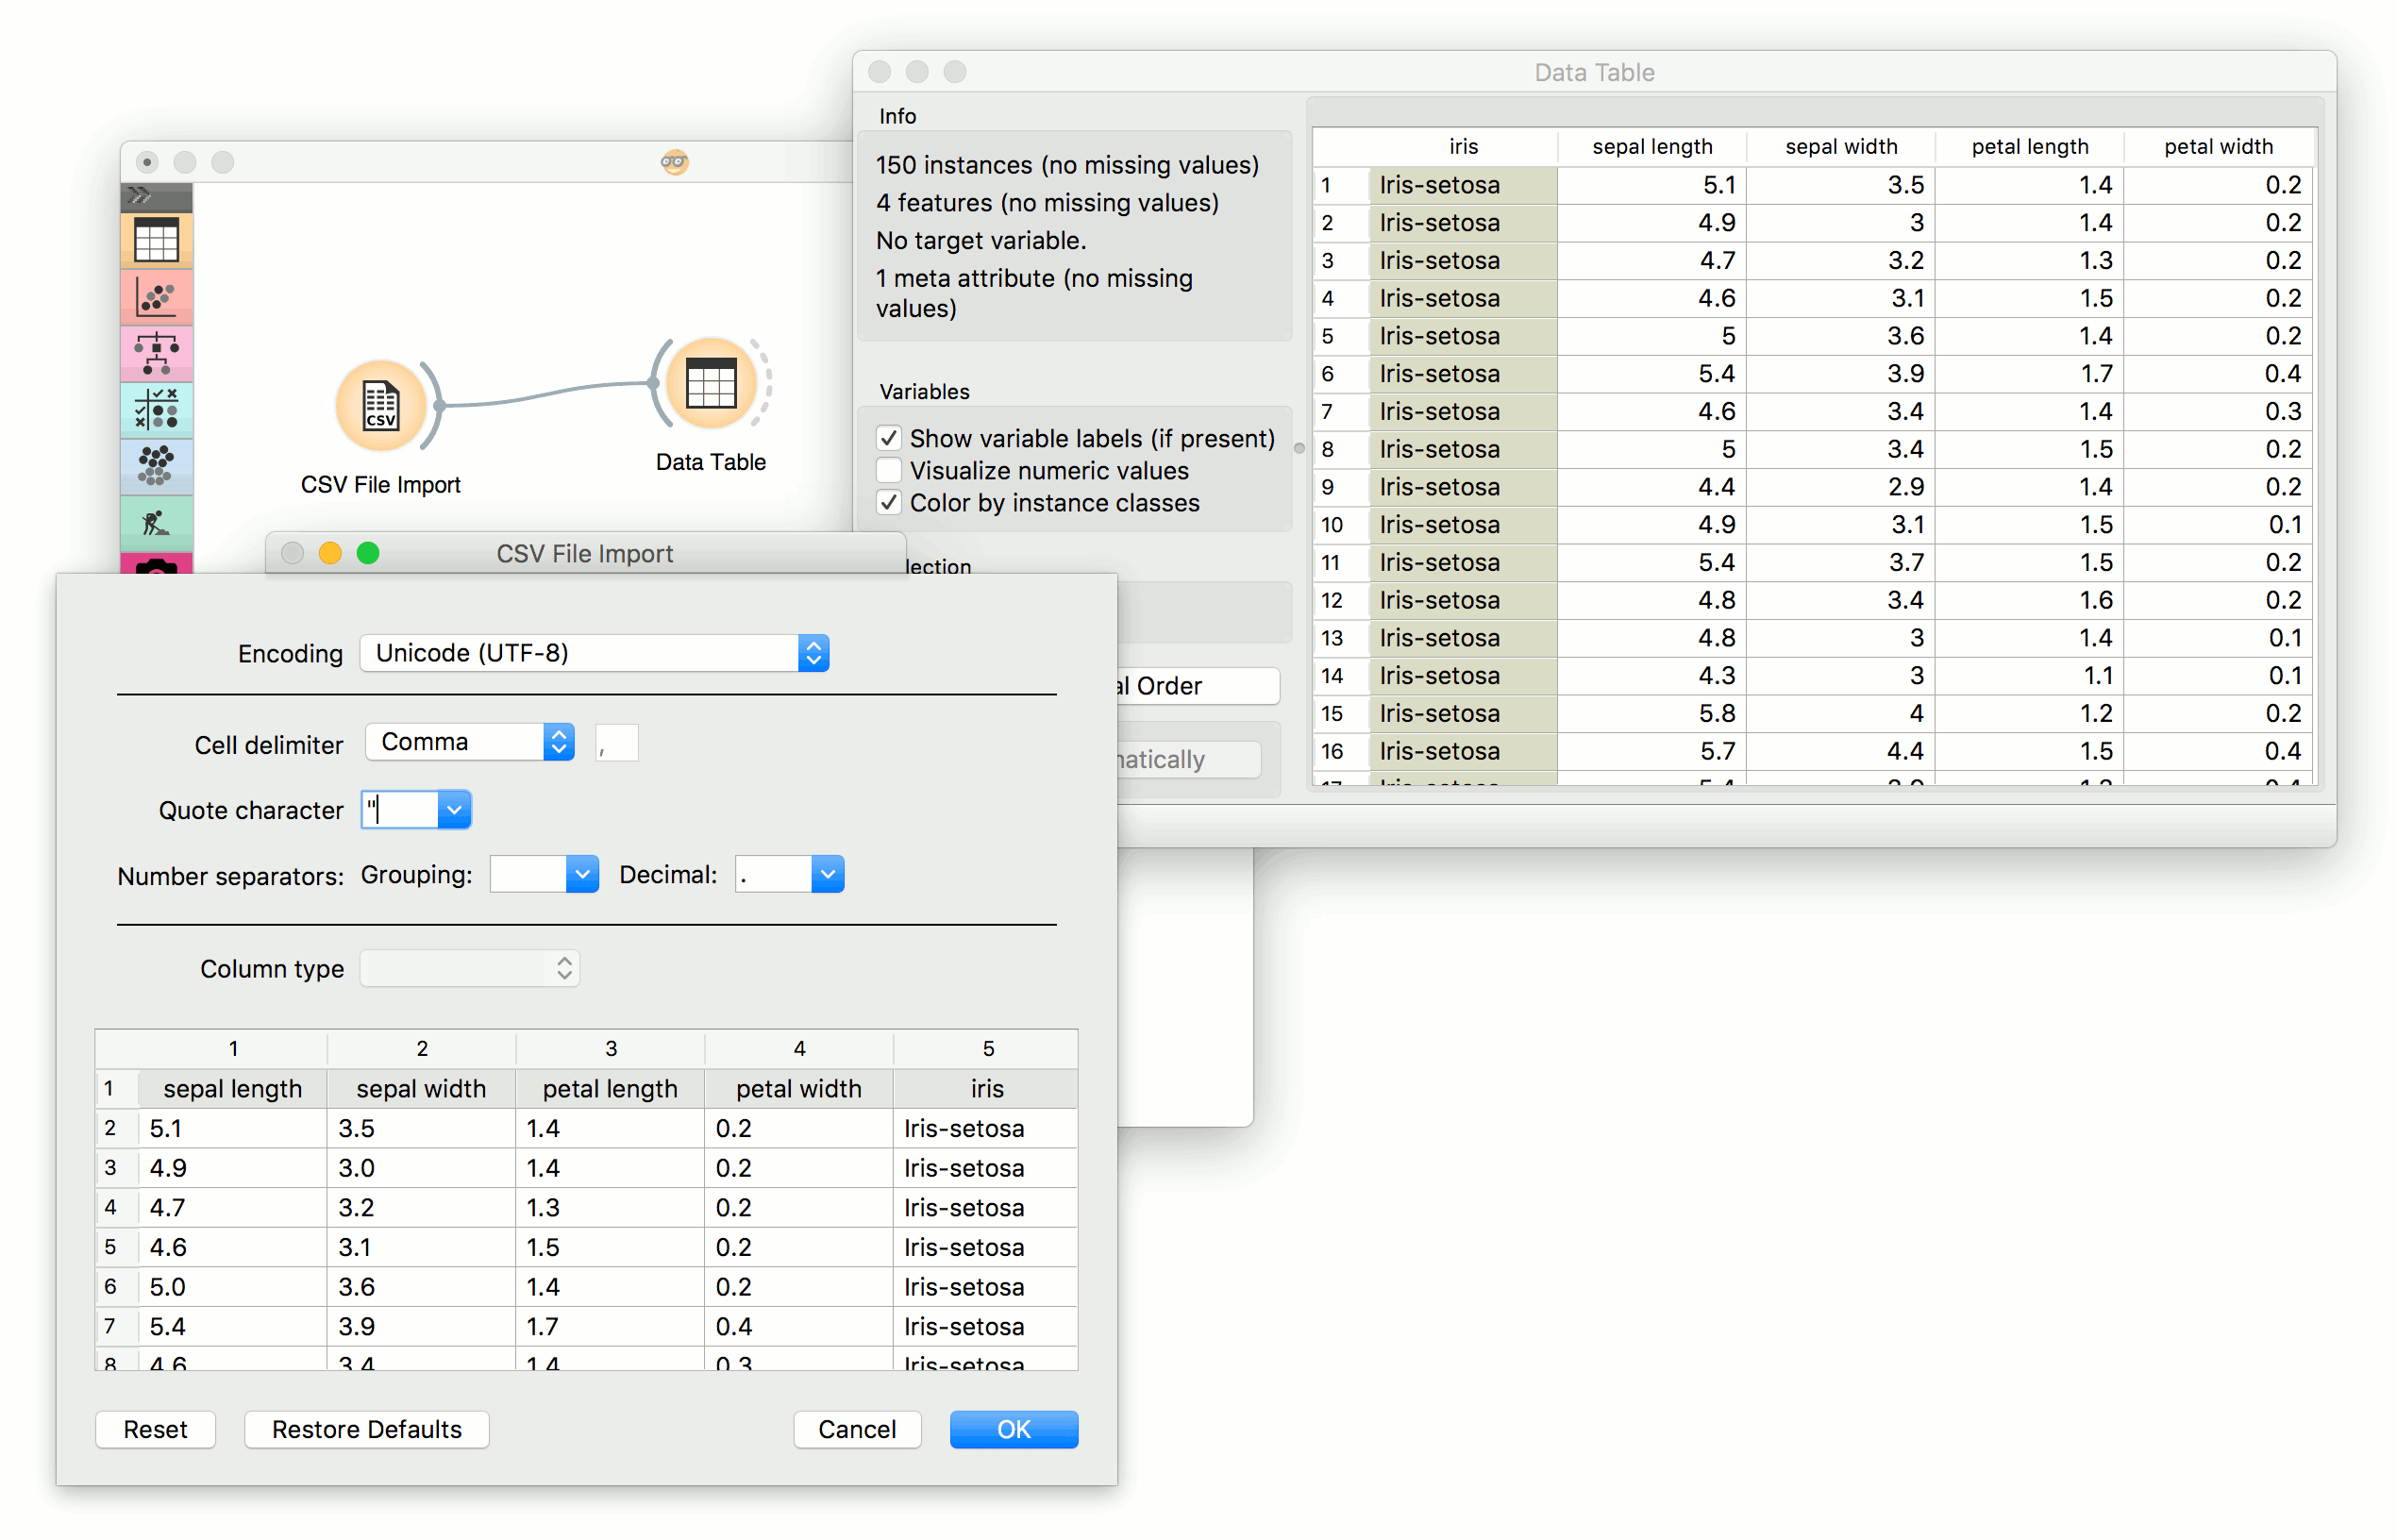 custom mac clear dropdown dialog boxes for windows